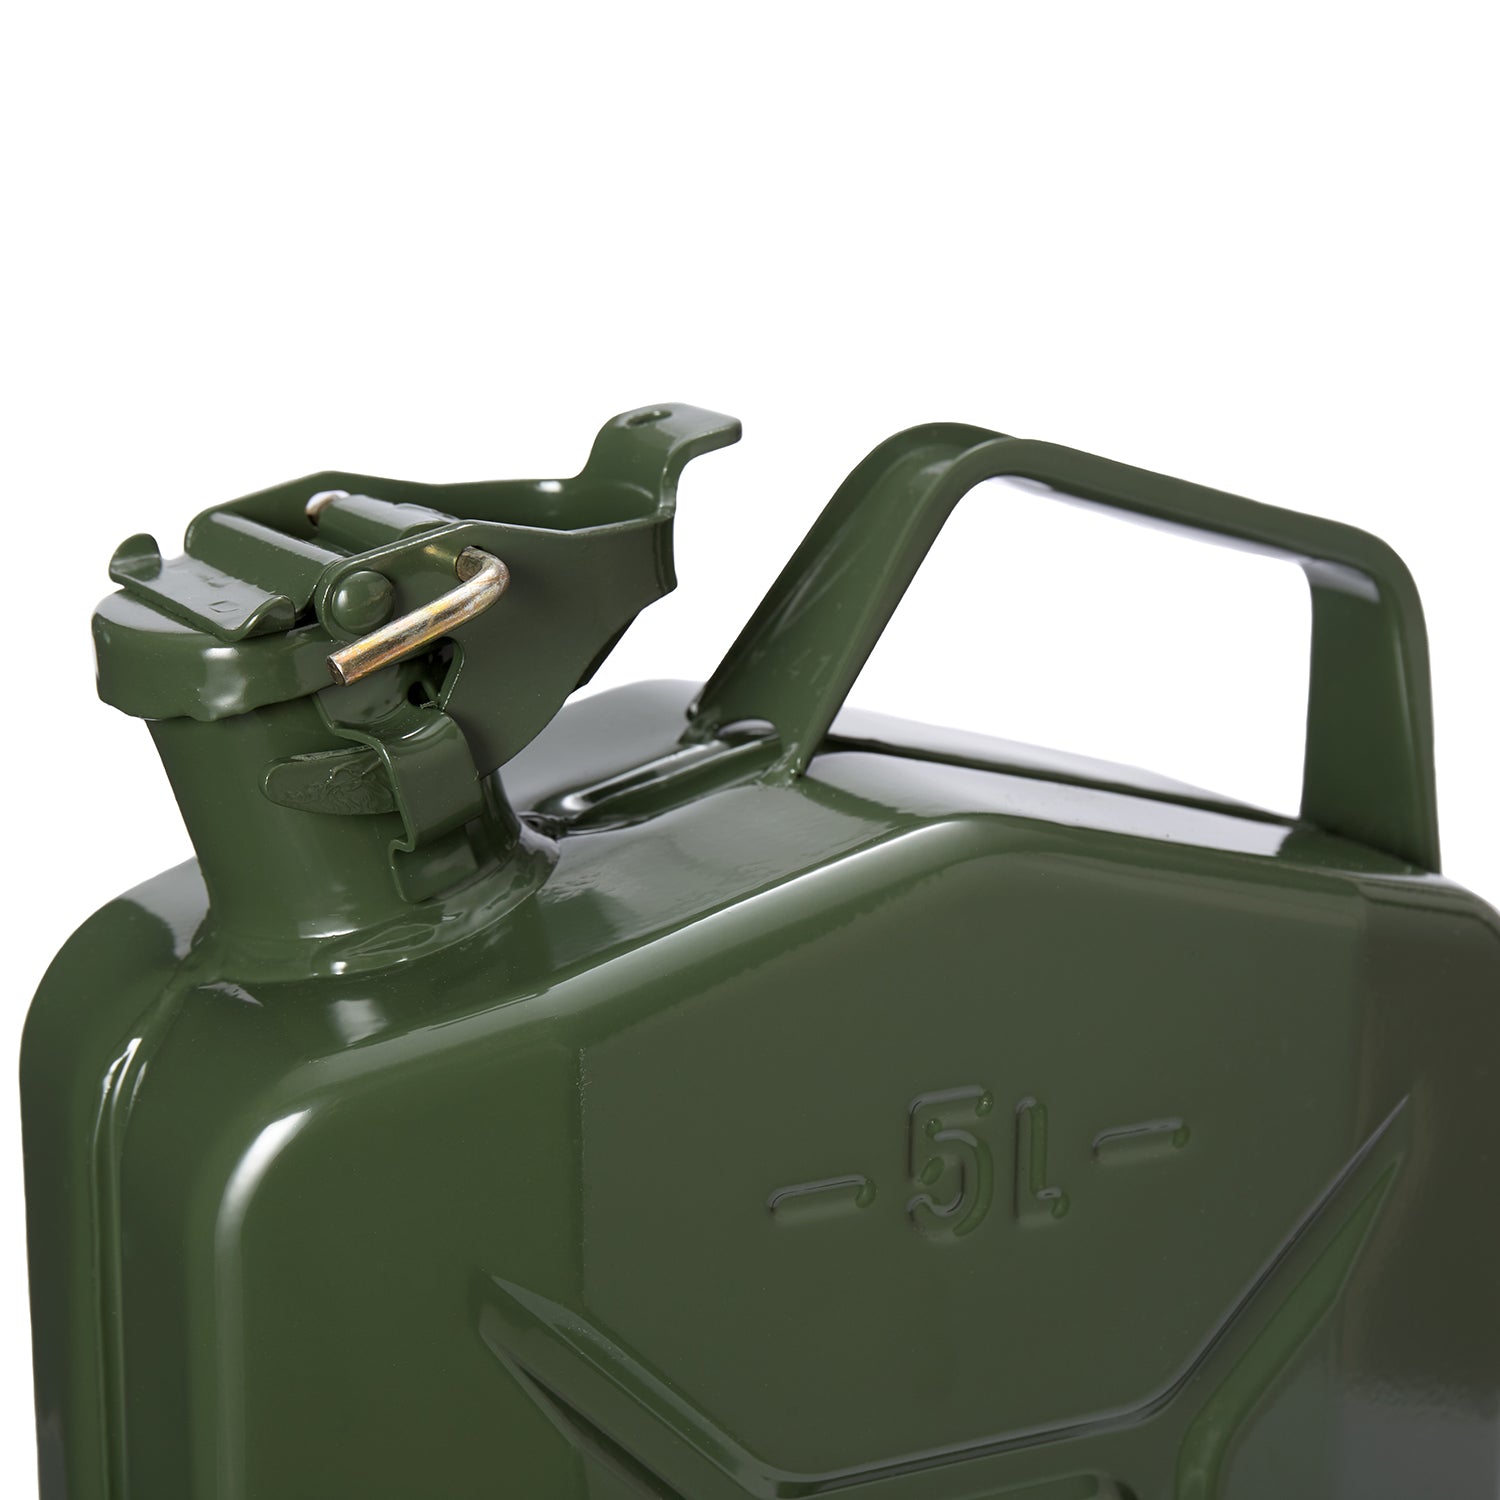 Metall Benzinkanister Kraftstoffkanister olivgrün 5 Liter - 3 Stück